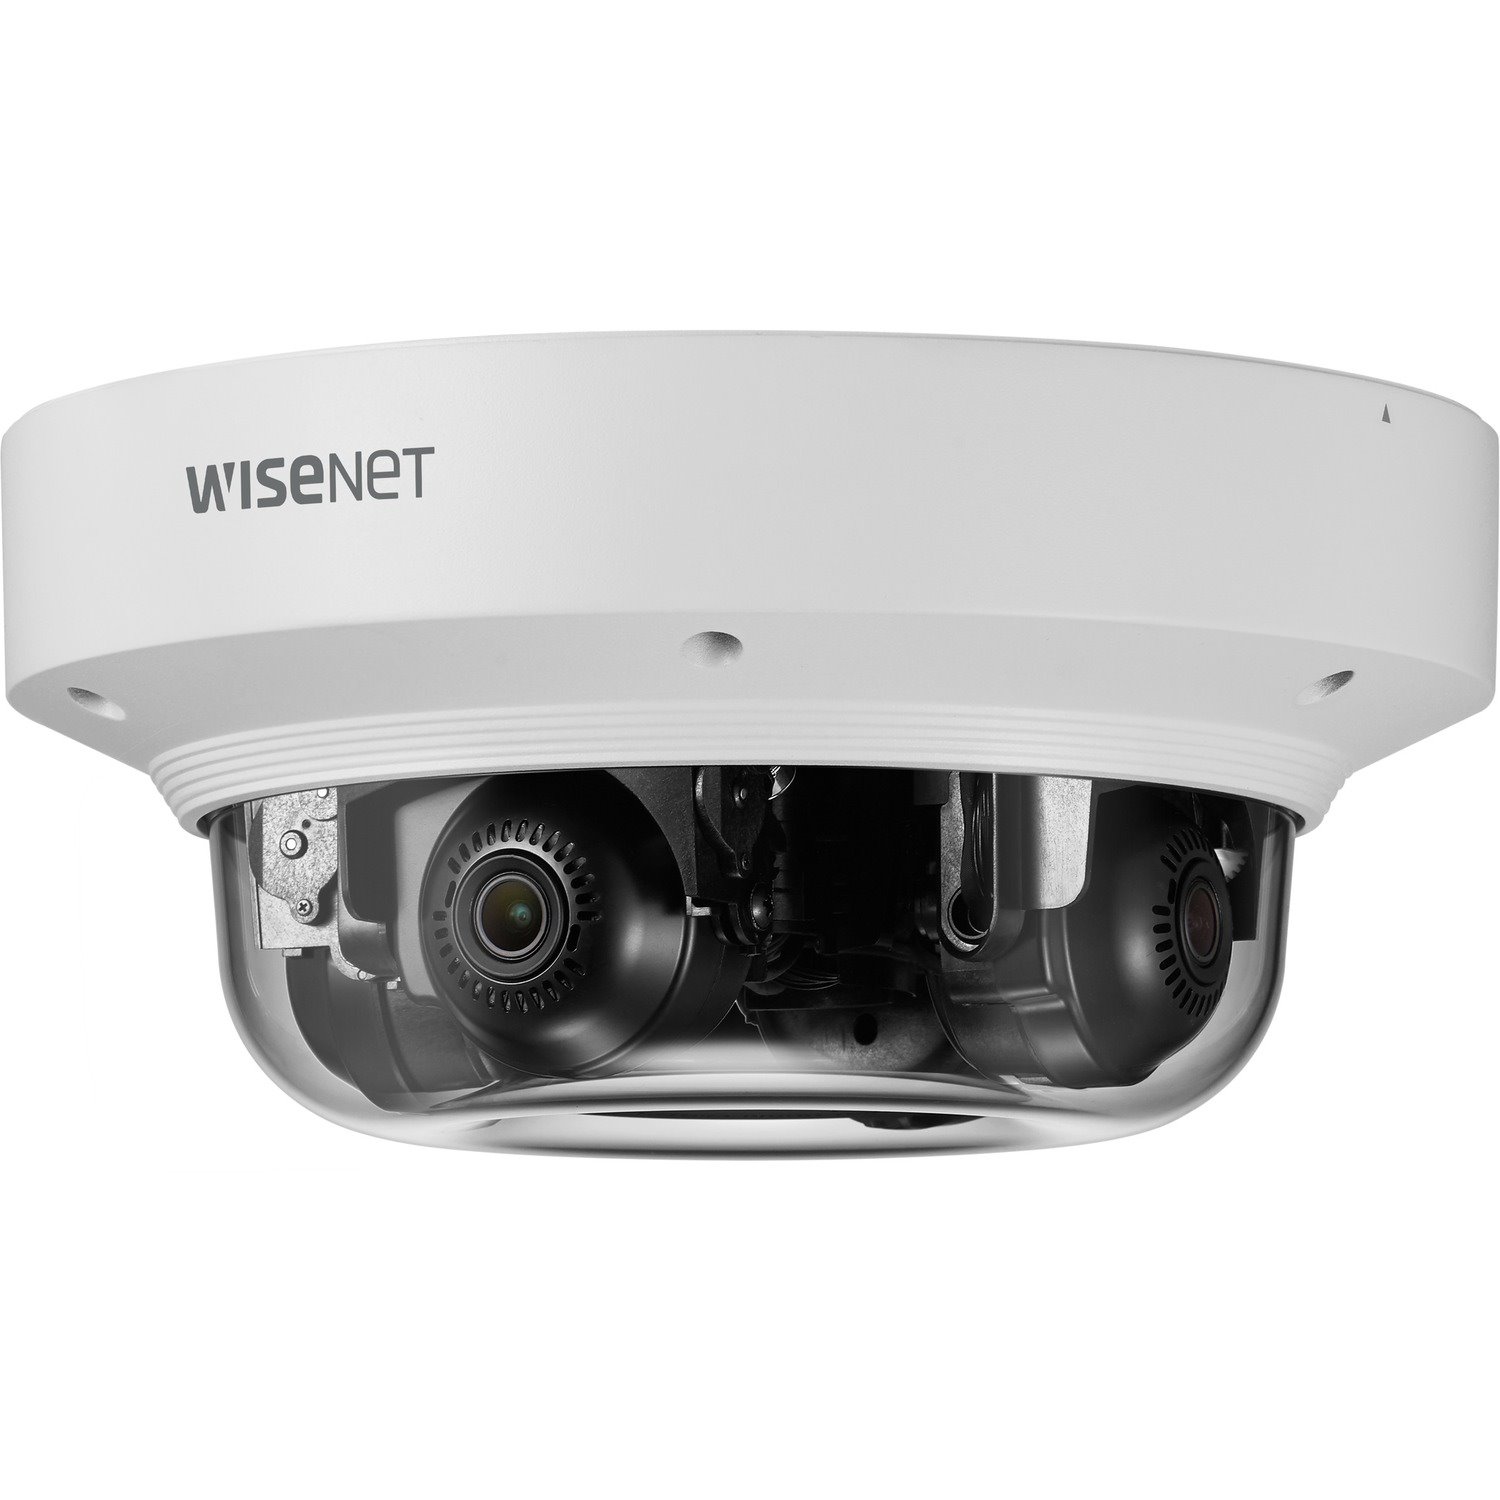 Wisenet PNM-9084QZ 2 Megapixel Outdoor Full HD Network Camera - Color, Monochrome - Dome - White